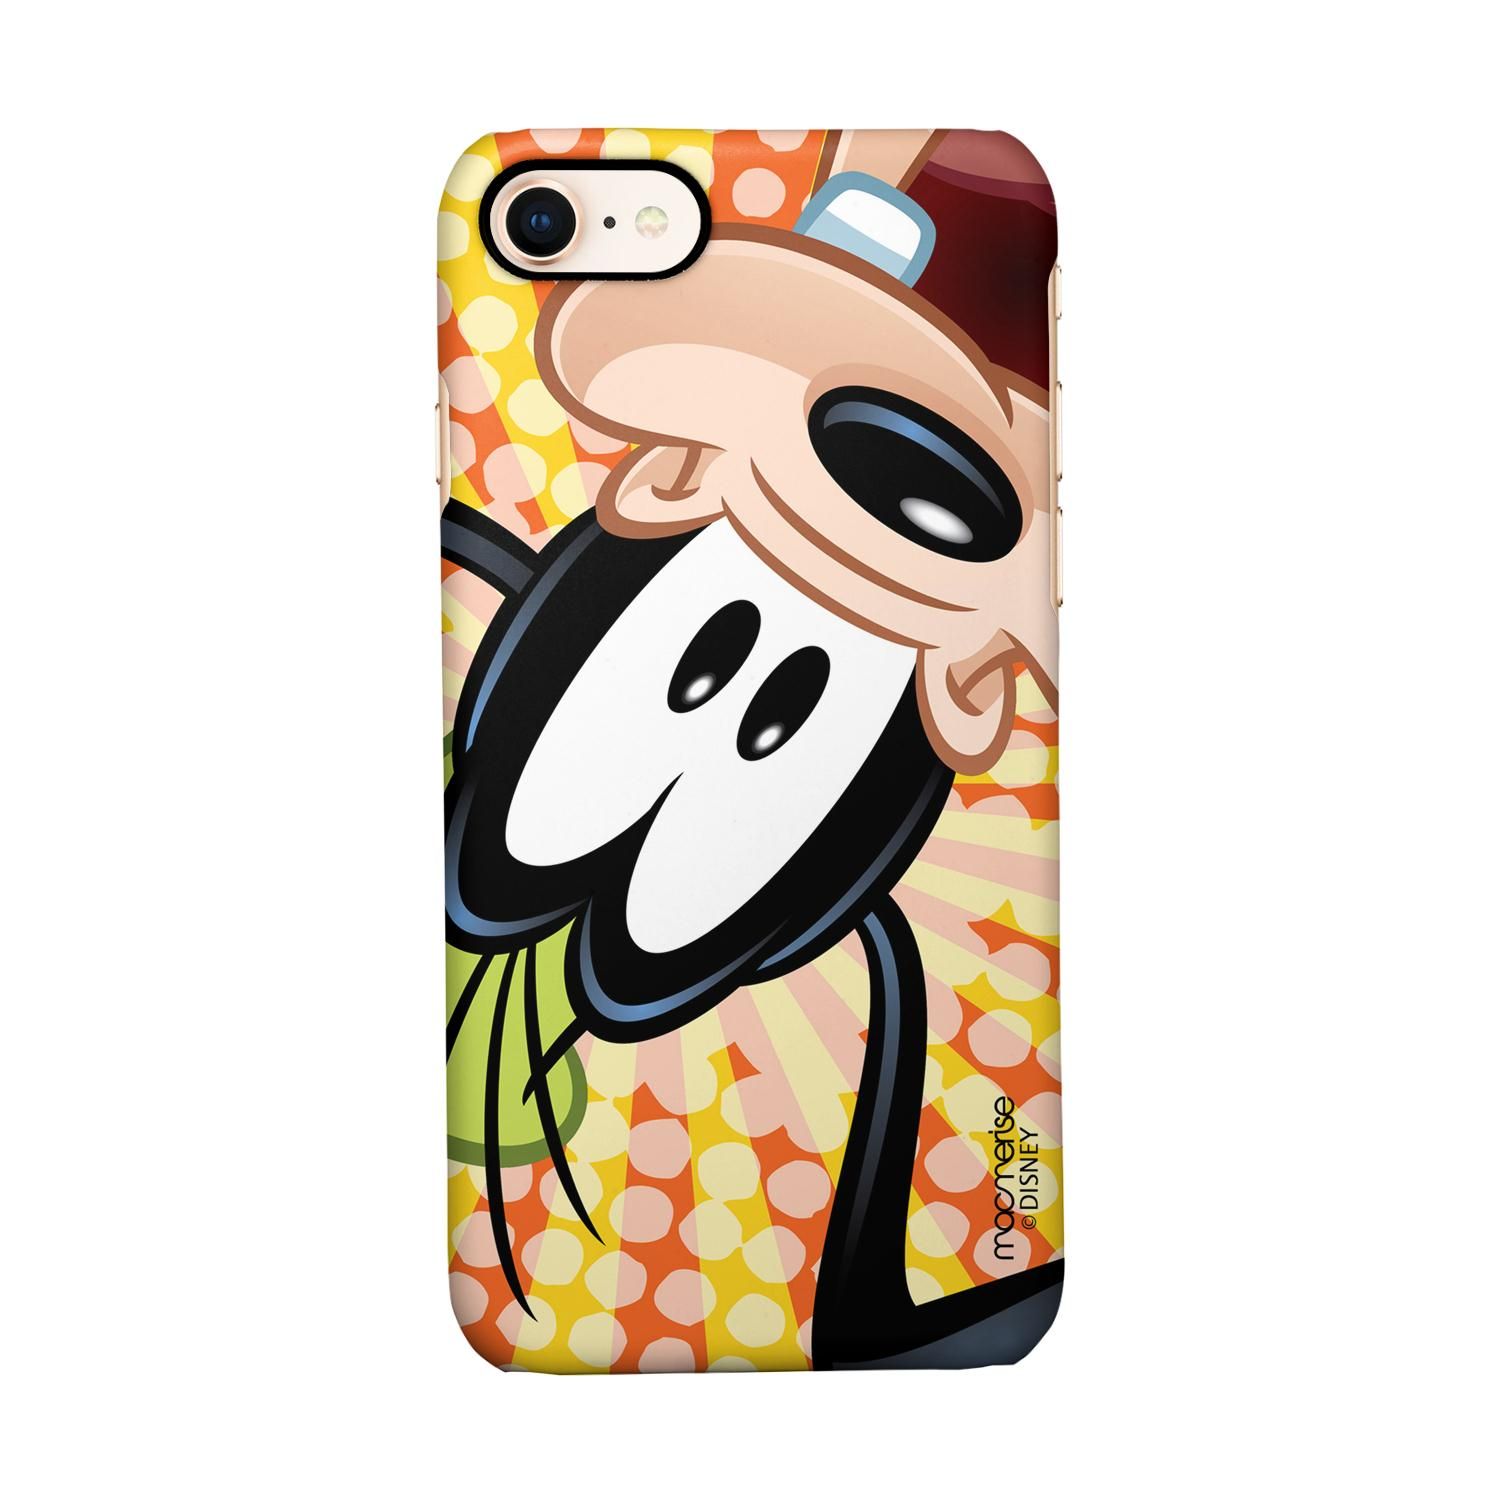 Buy Goofy Upside Down - Sleek Phone Case for iPhone 7 Online